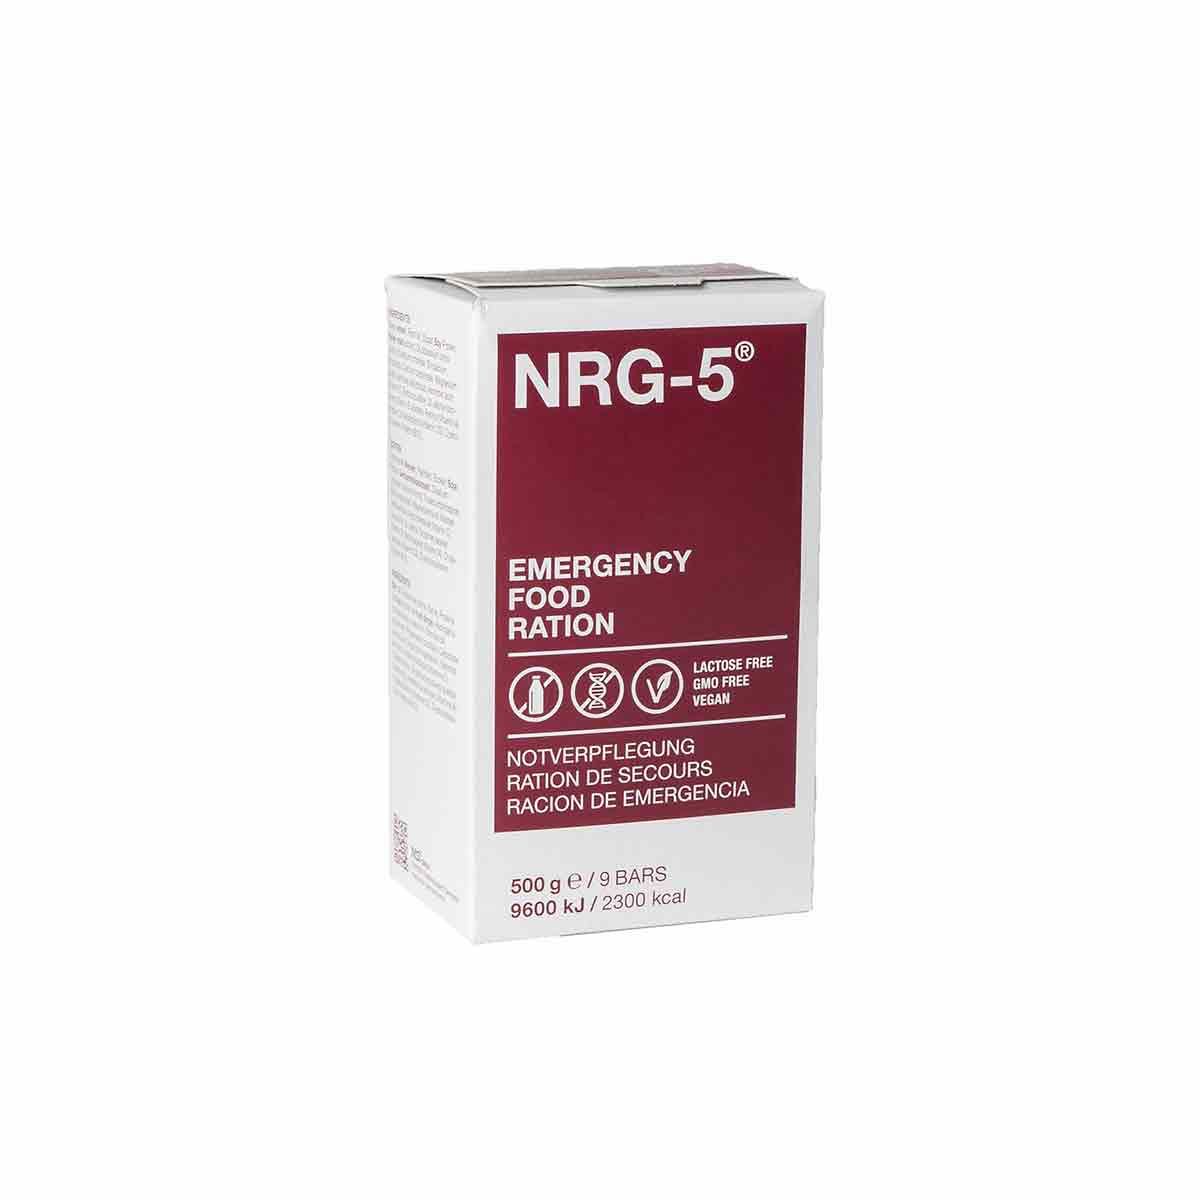 NRG-5 emergency ration - 20 years